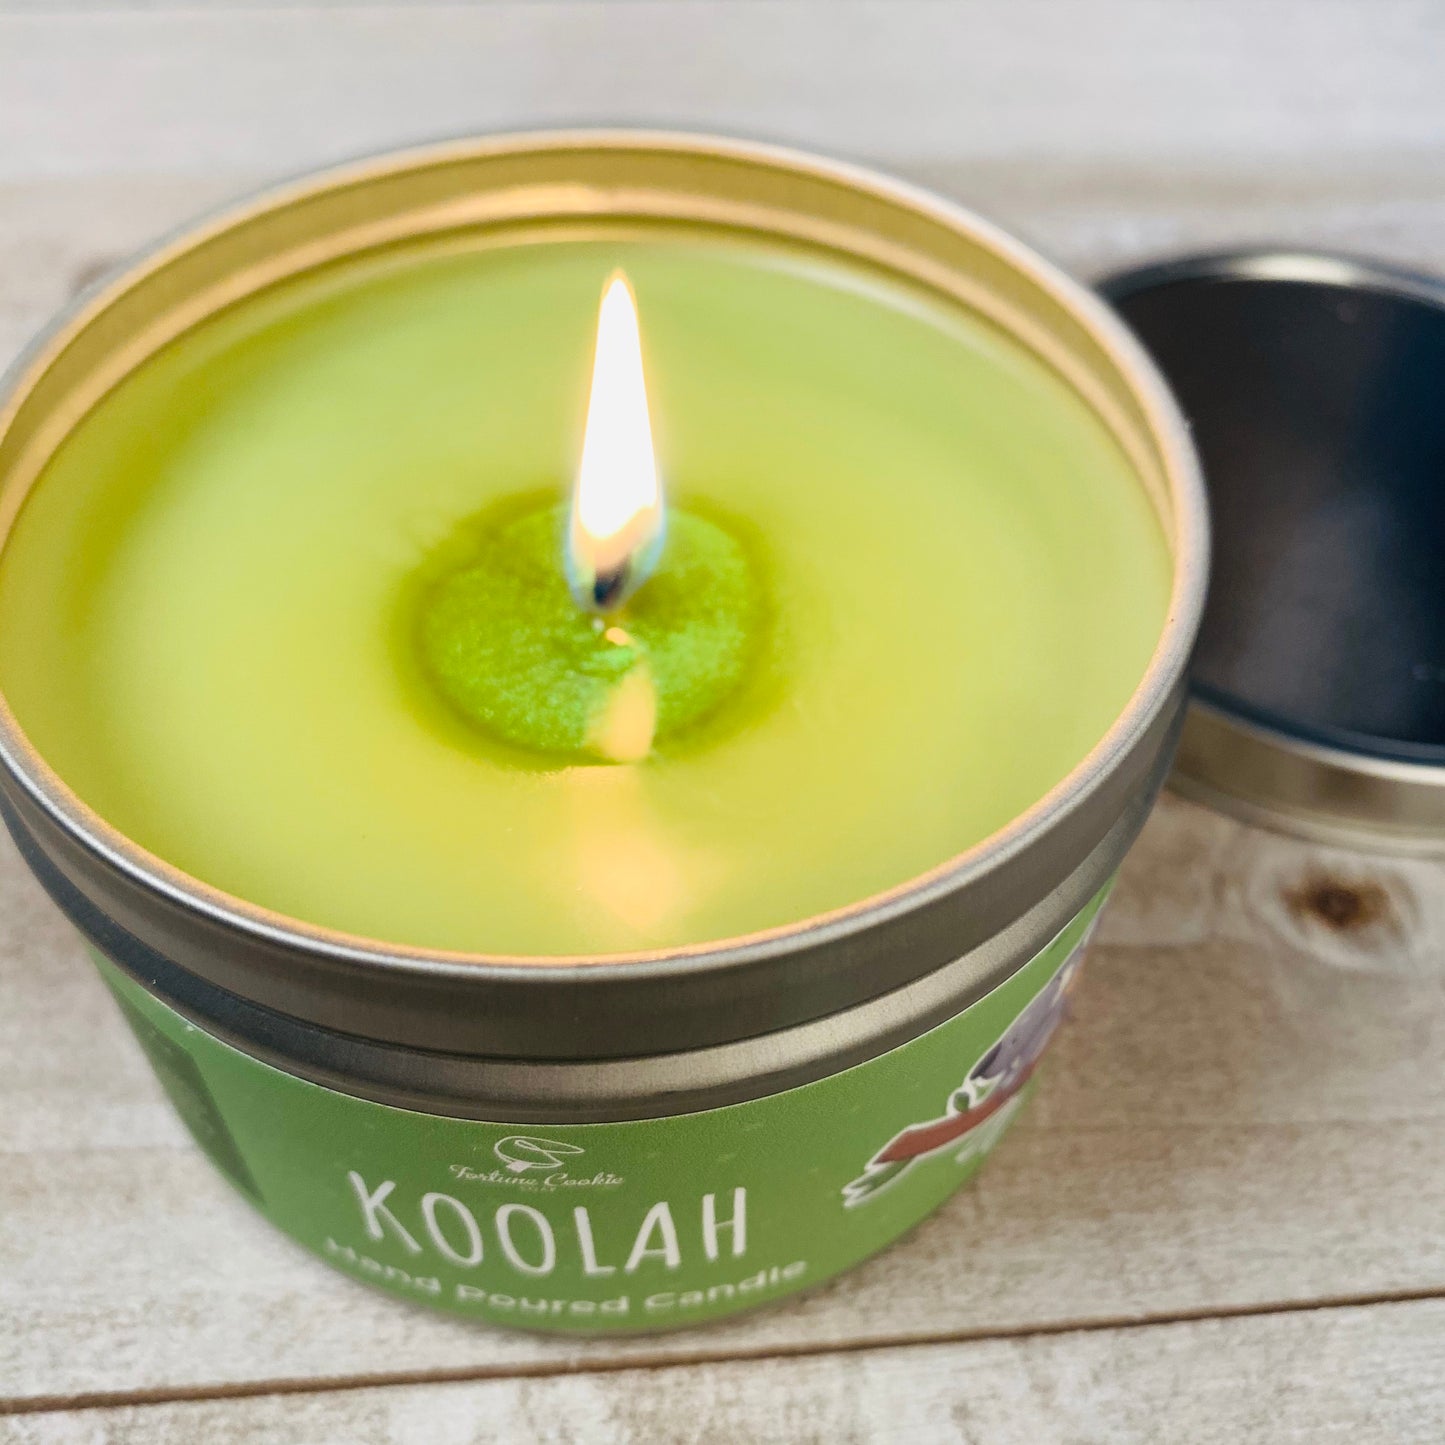 KOOLAH Hand Poured Candle (XL)